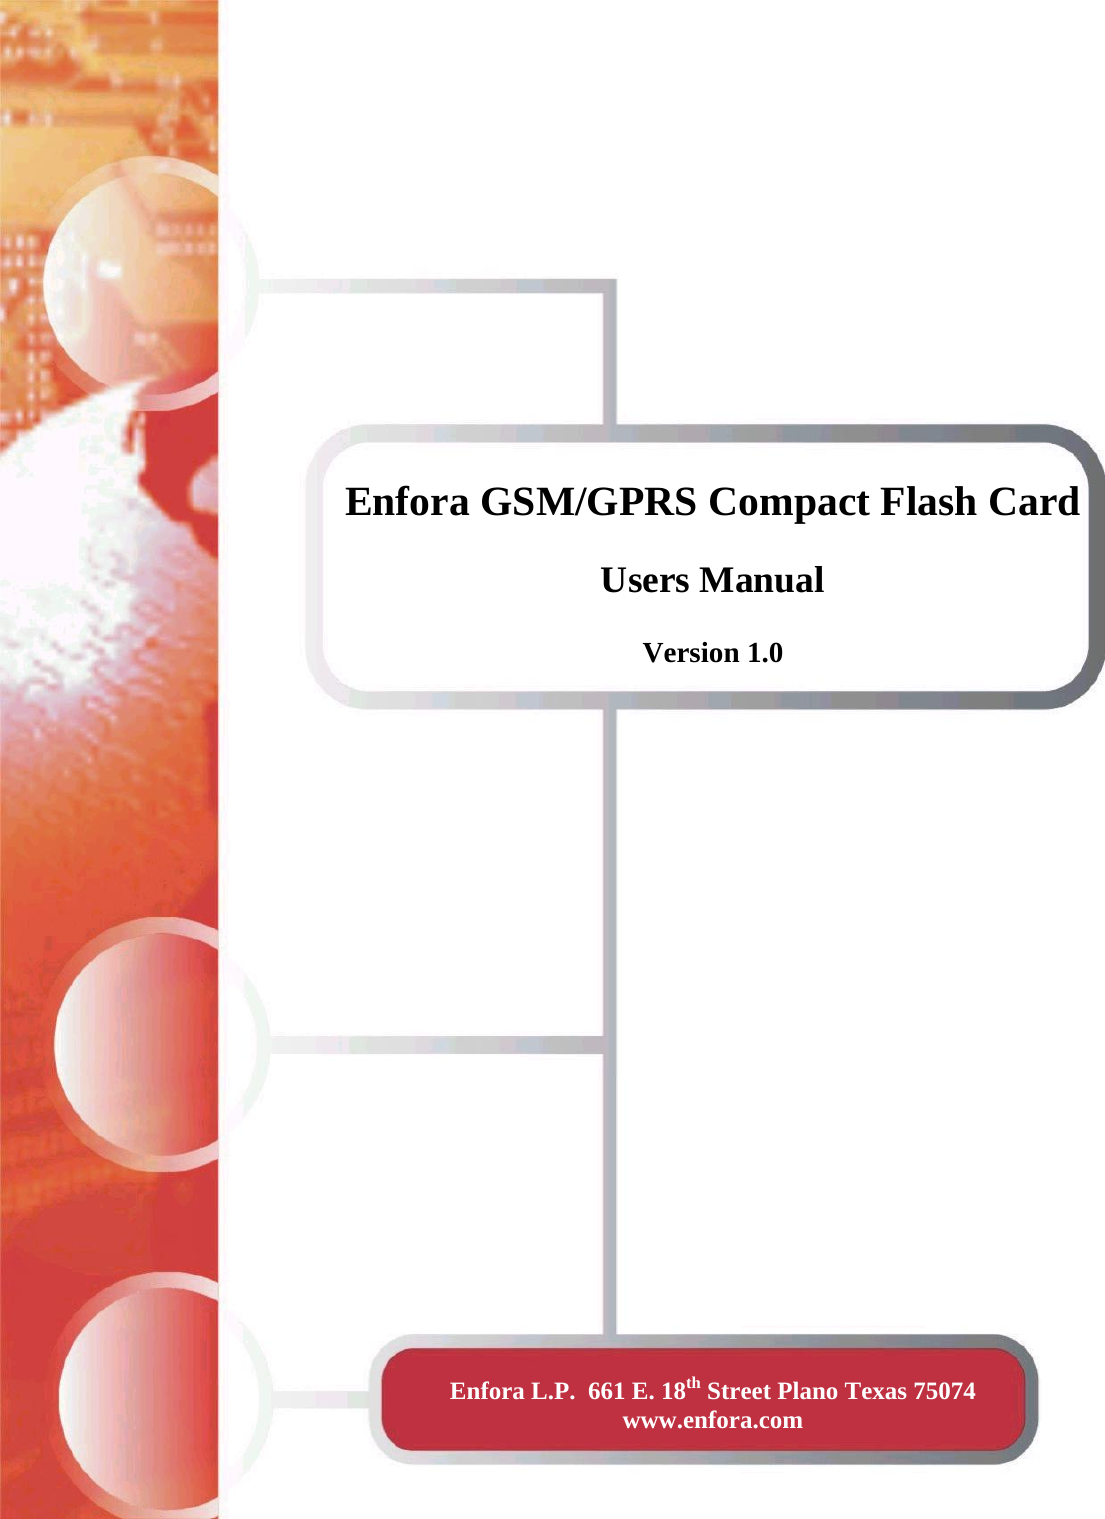    Enfora GSM/GPRS Compact Flash Card Users Manual  Version 1.0 Enfora L.P.  661 E. 18th Street Plano Texas 75074   www.enfora.com 